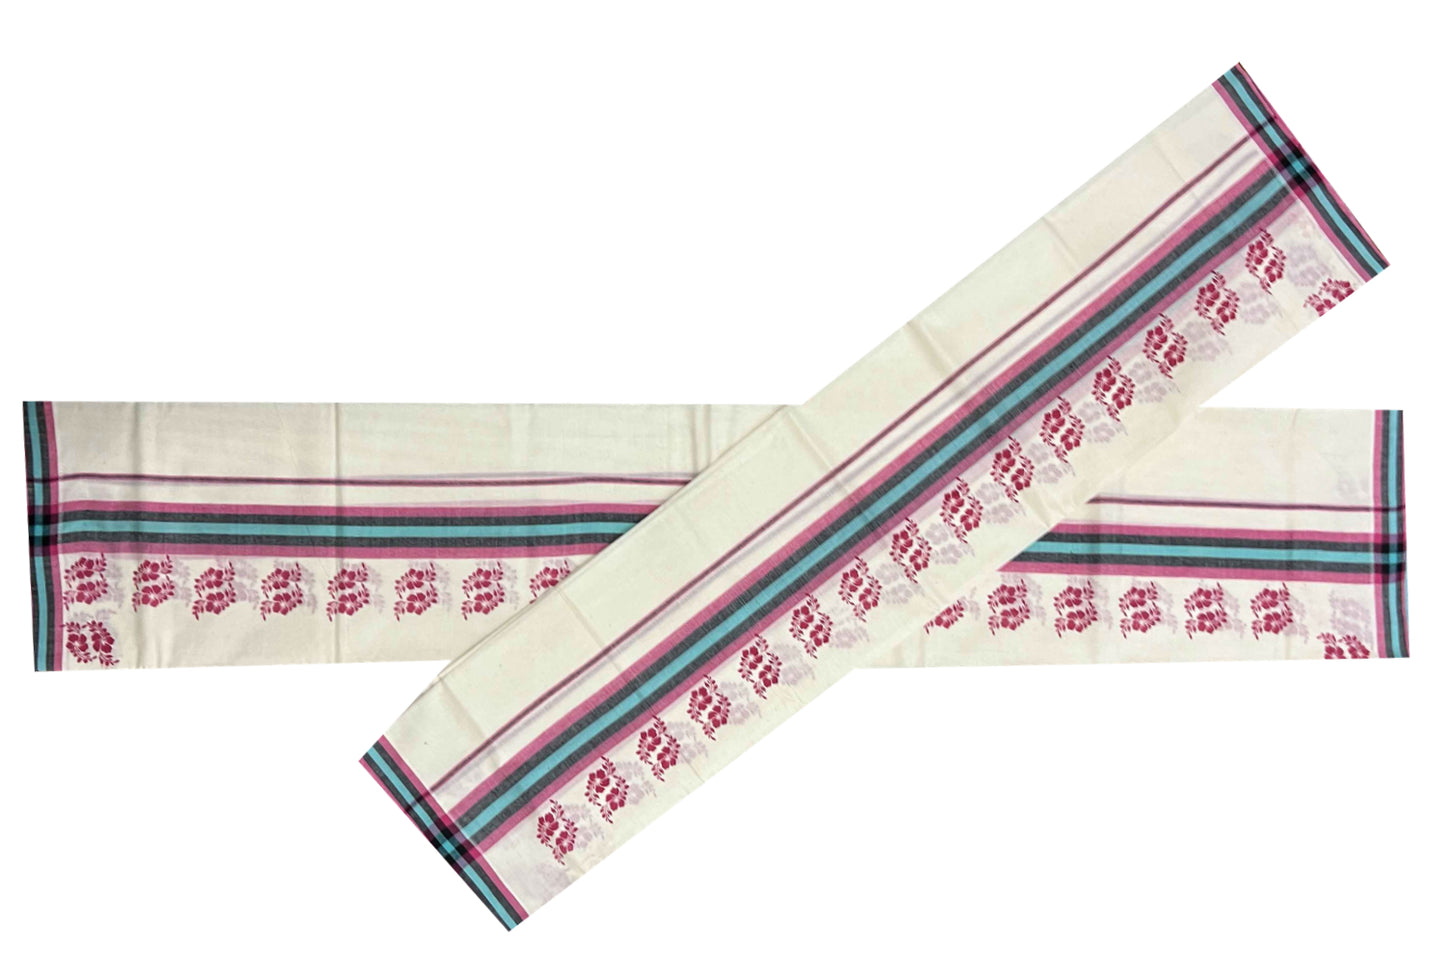 Kerala Cotton Mulloth Mundum Neriyathum Single (Set Mundu) with Pink Floral Block Print Border (Extra Soft Cotton)